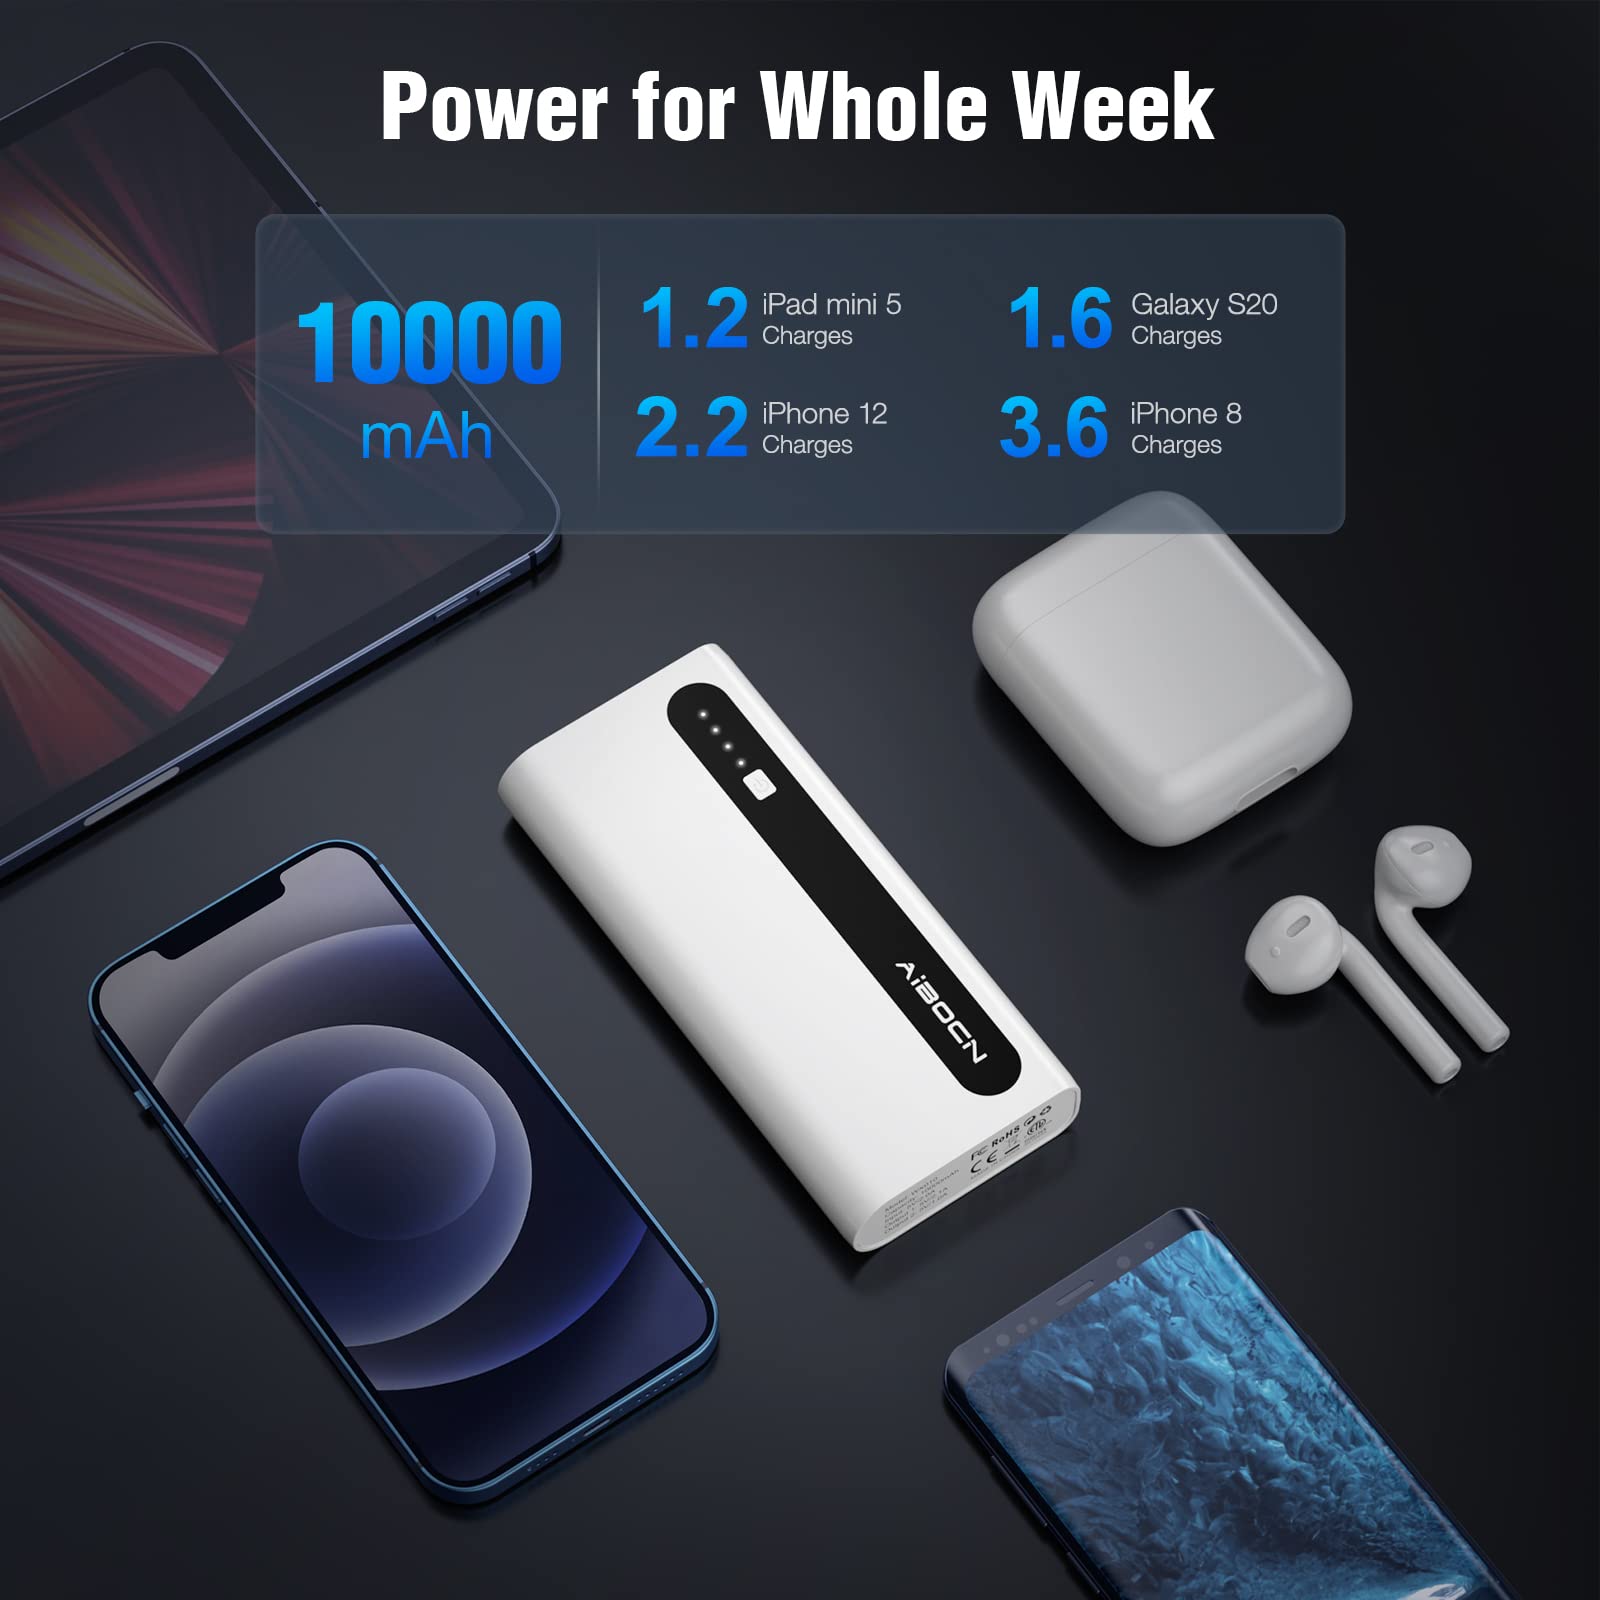 Aibocn Power Bank 10,000mAh Phone Portable Charger with Flashlight (White+Black)